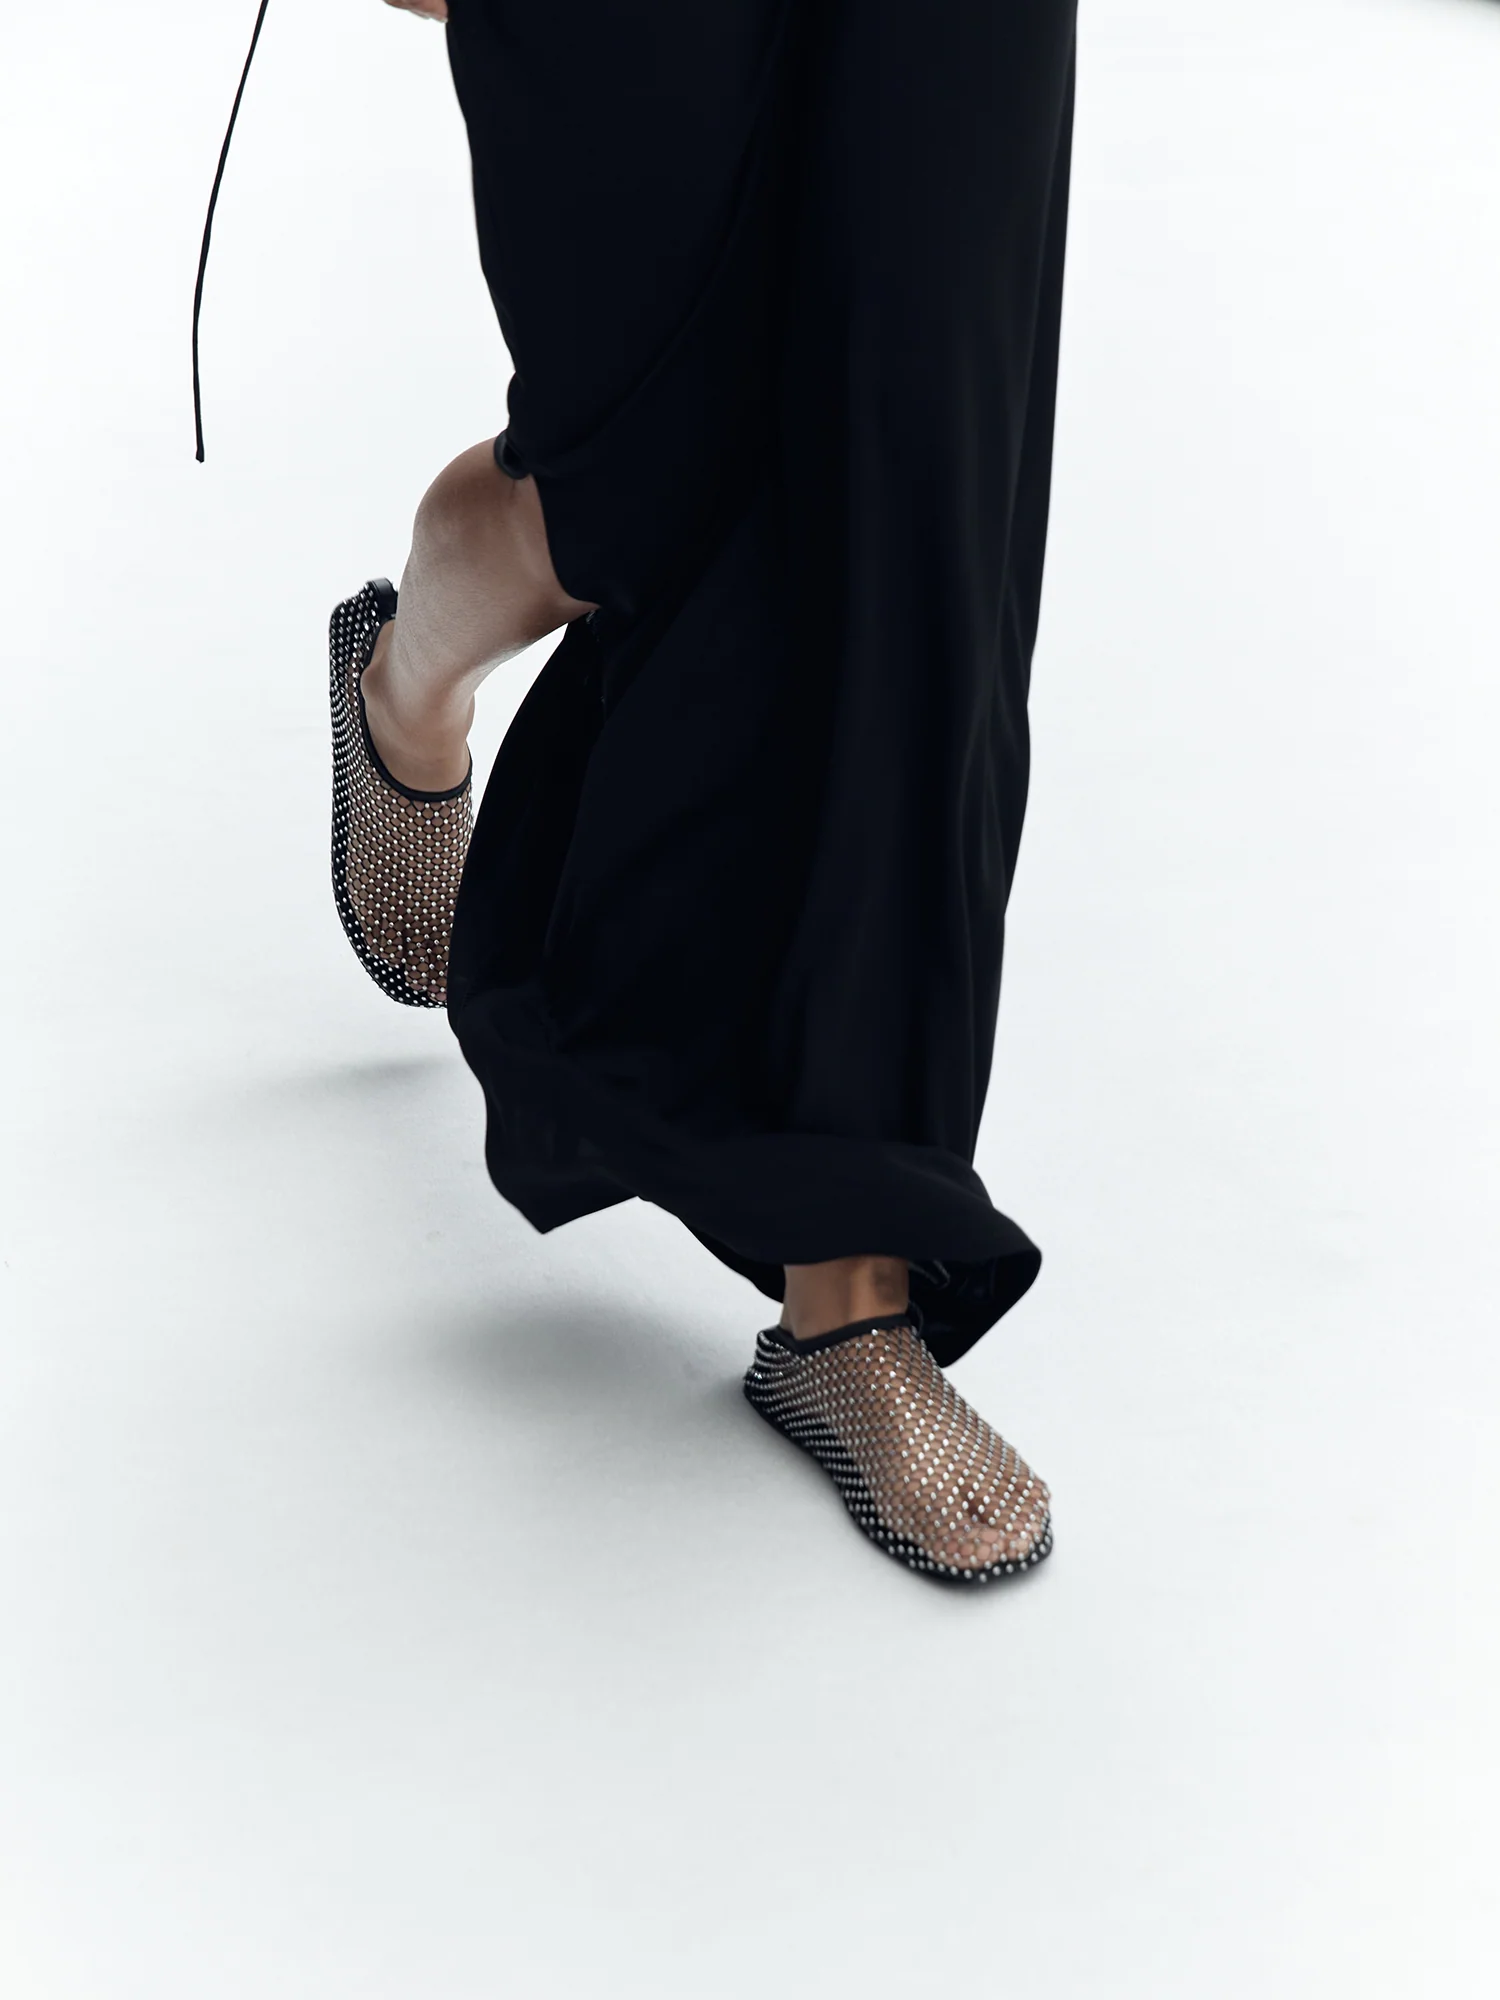 Christopher Esber Minette Flat in Black available at The New Trend Australia.